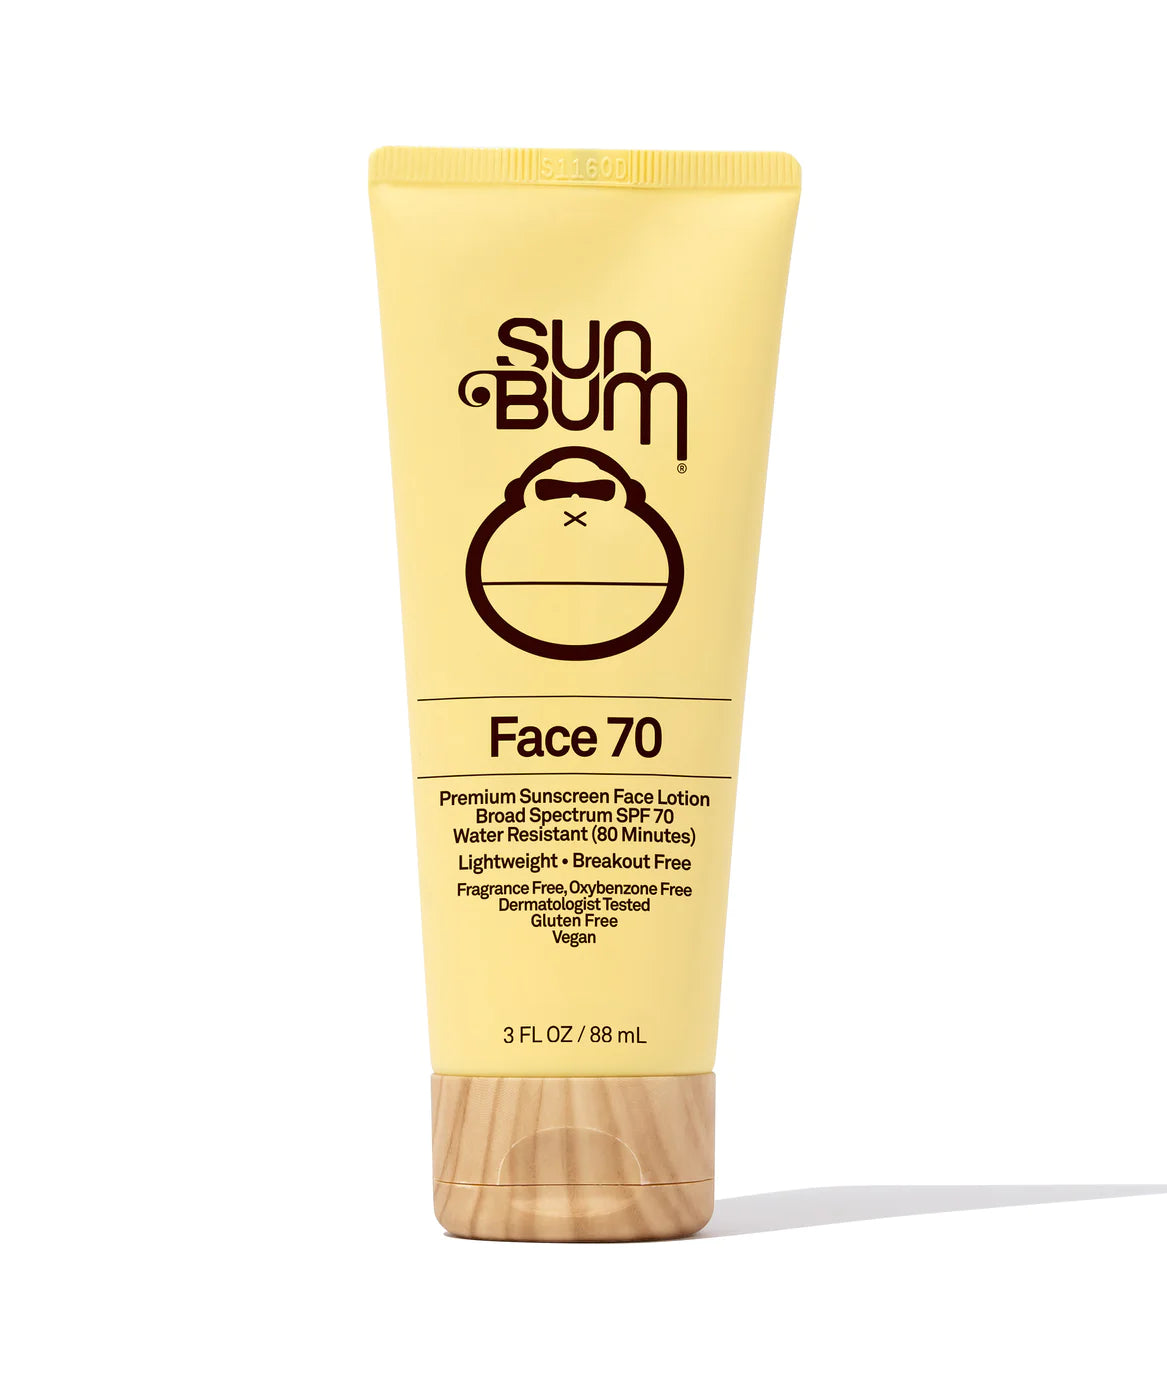 SUN BUM - Original SPF 70 Sunscreen Face Lotion